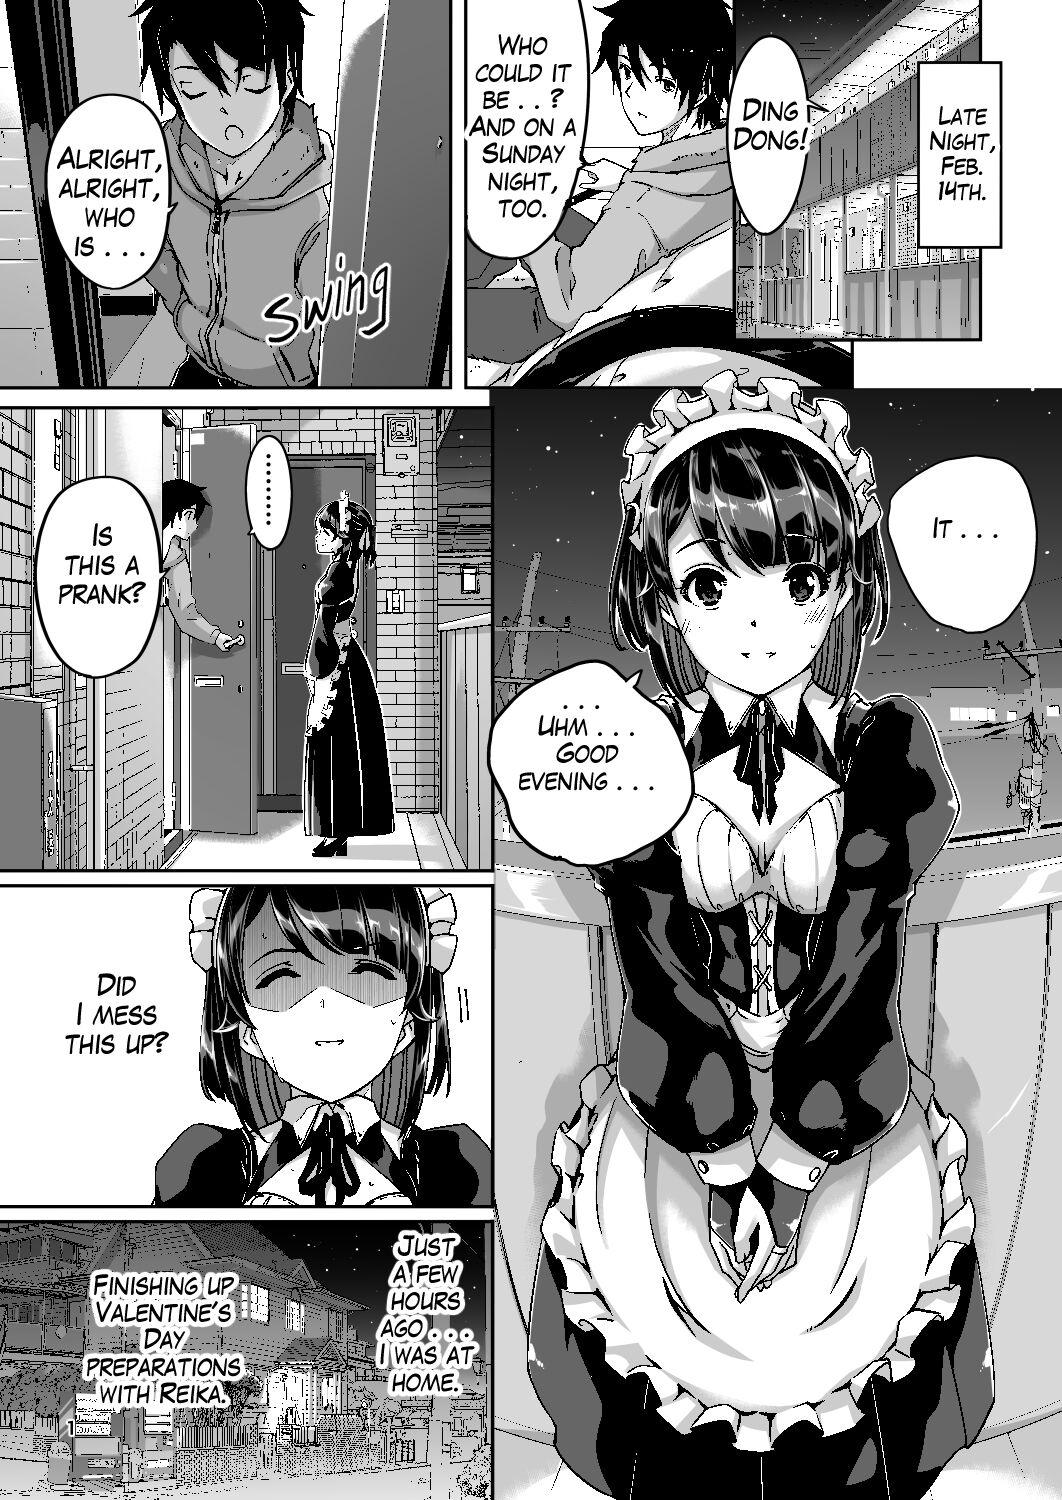 Reika is a my splendid maid #05 0